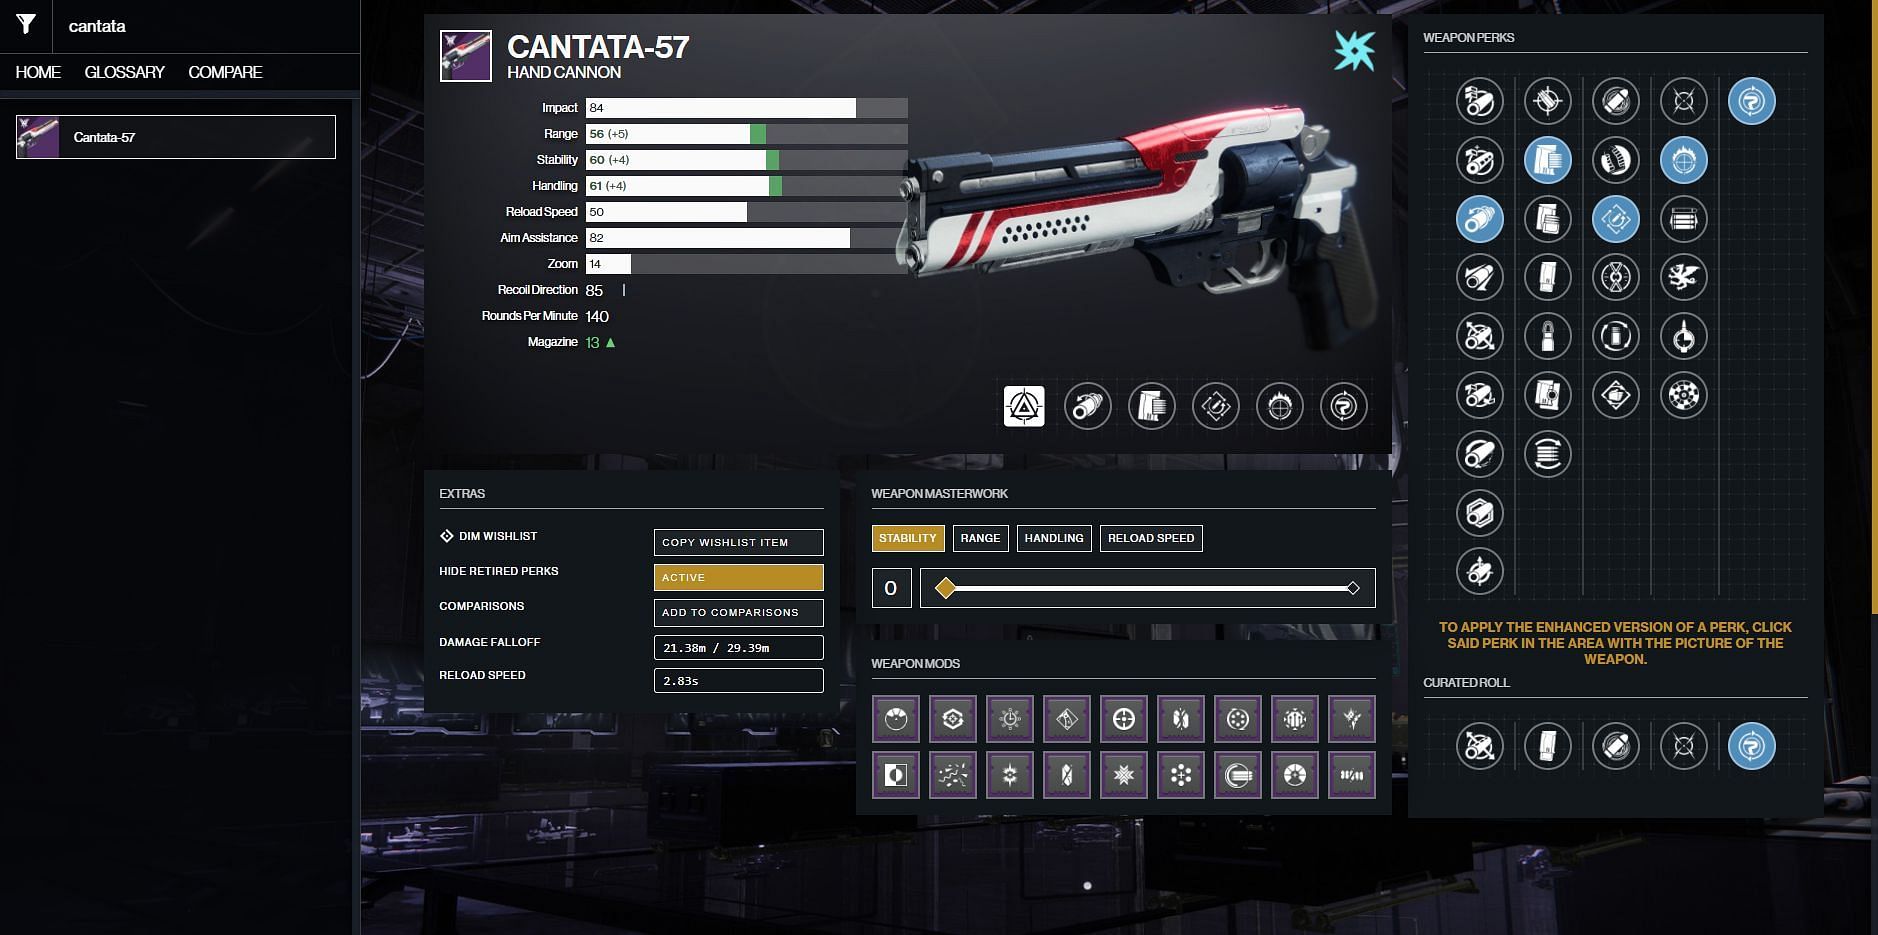 Best perks for Cantata-57 in PvE (Image via Destiny 2 gunsmith)